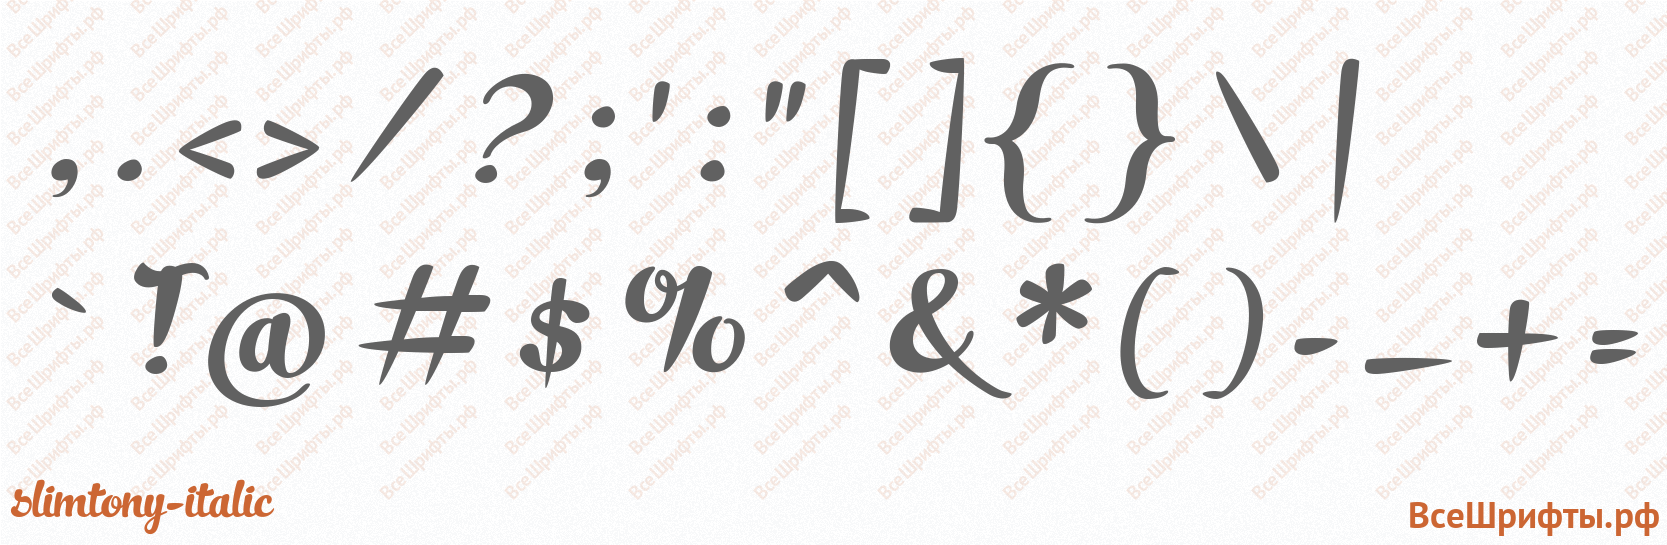 Шрифт SlimTony-Italic со знаками препинания и пунктуации